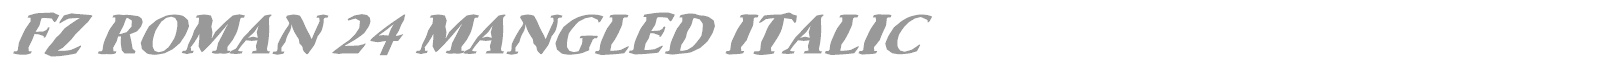 FZ ROMAN 24 MANGLED ITALIC font preview